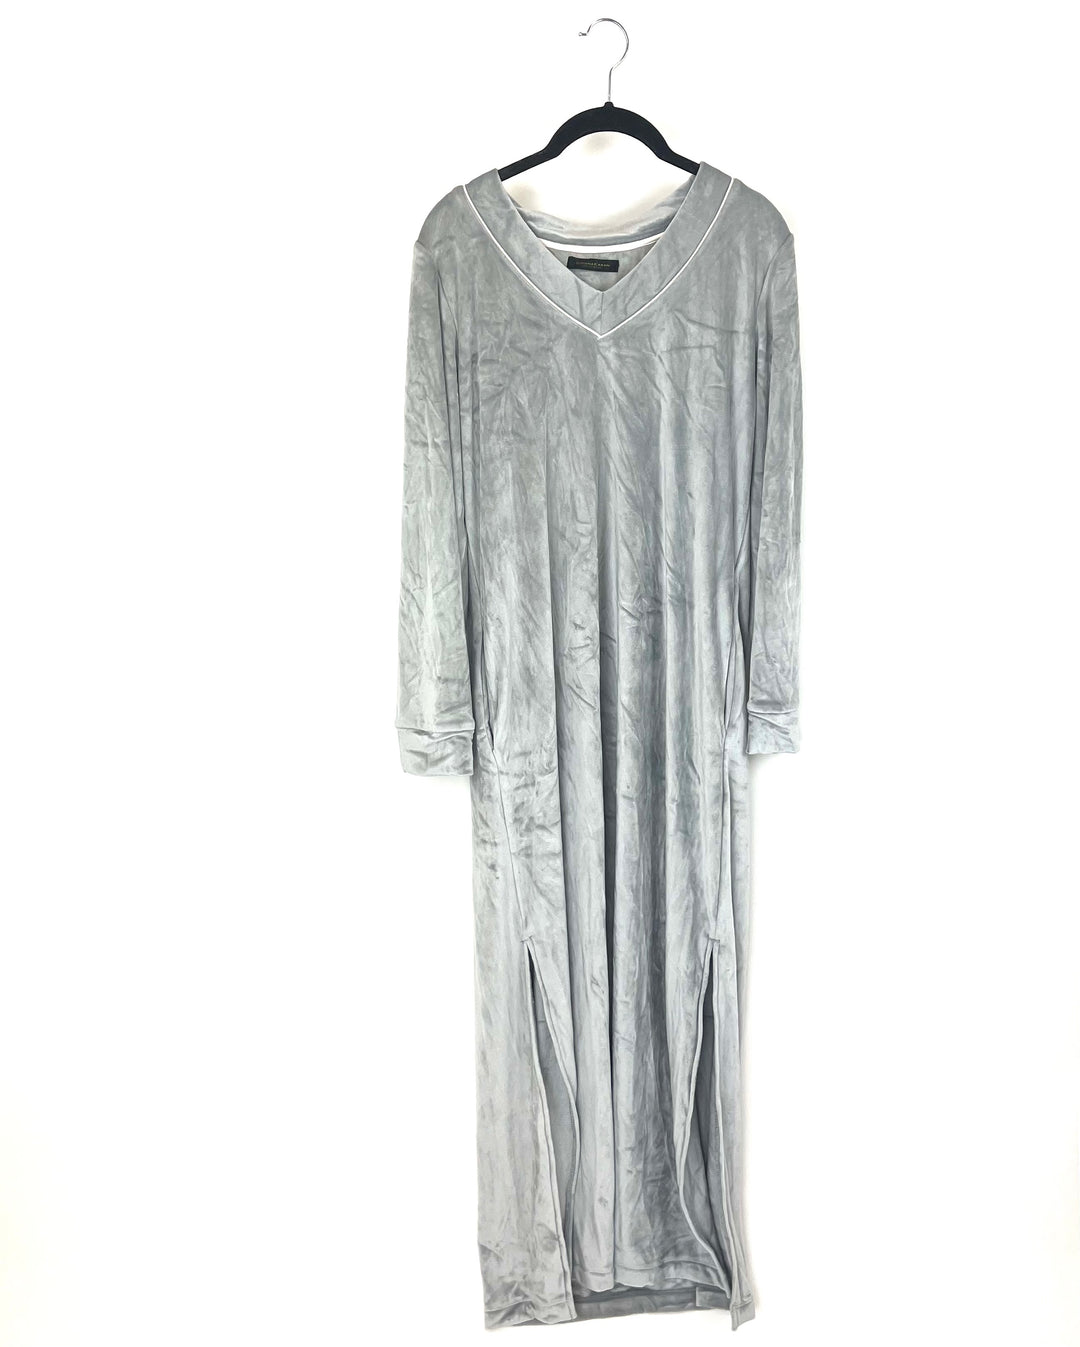 Grey Maxi Nightgown - Size 6/8